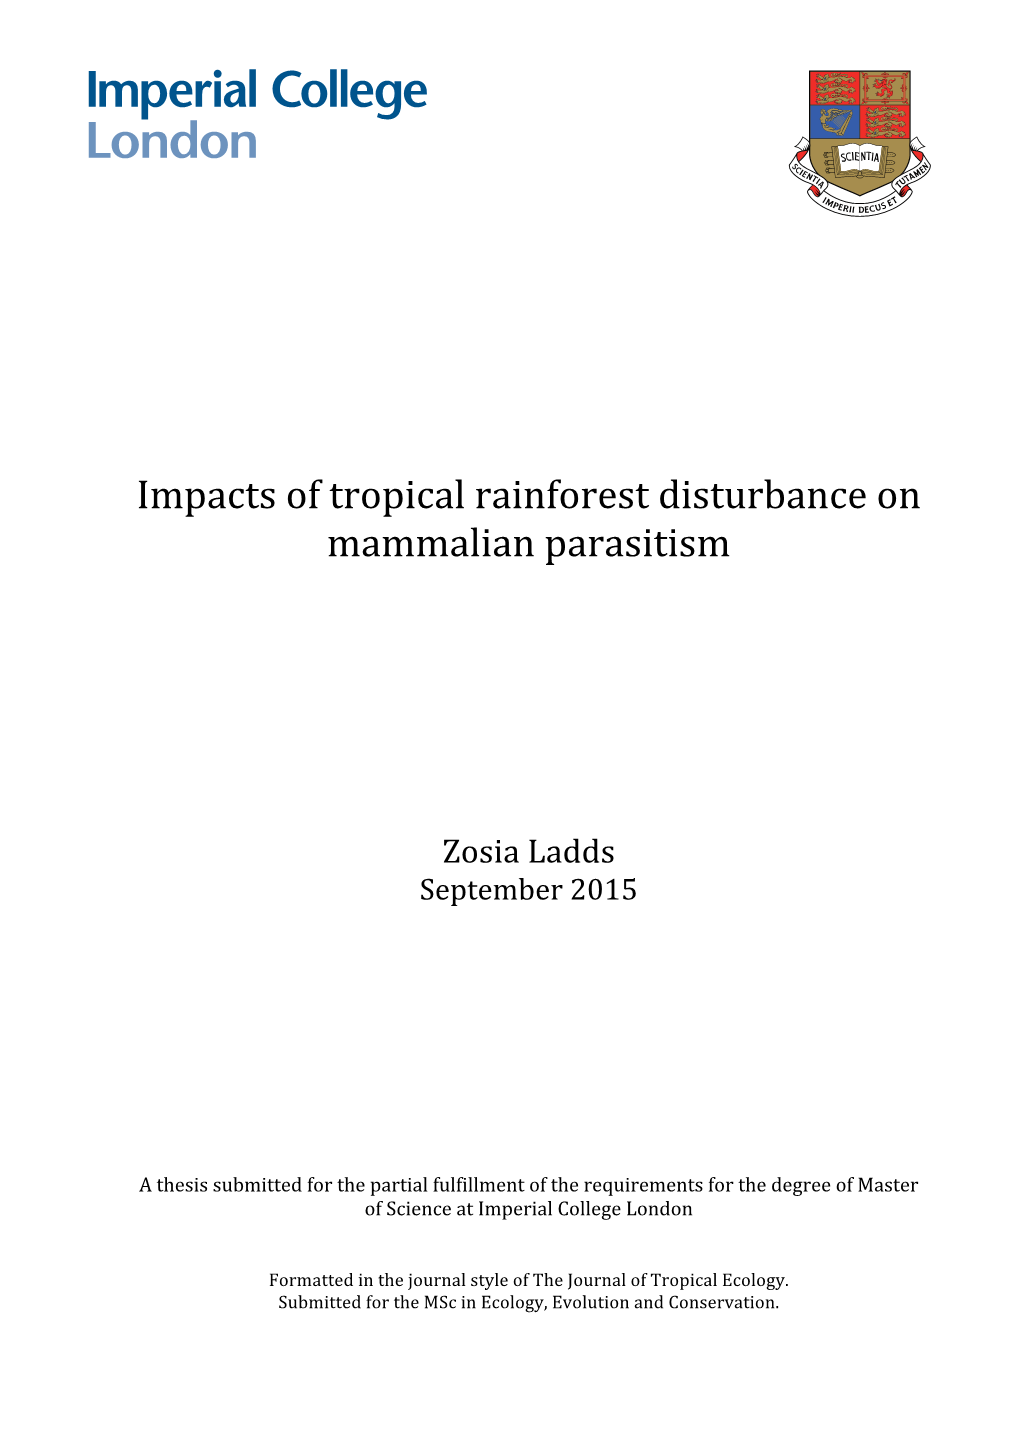 Impacts of Tropical Rainforest Disturbance on Mammalian Parasitism